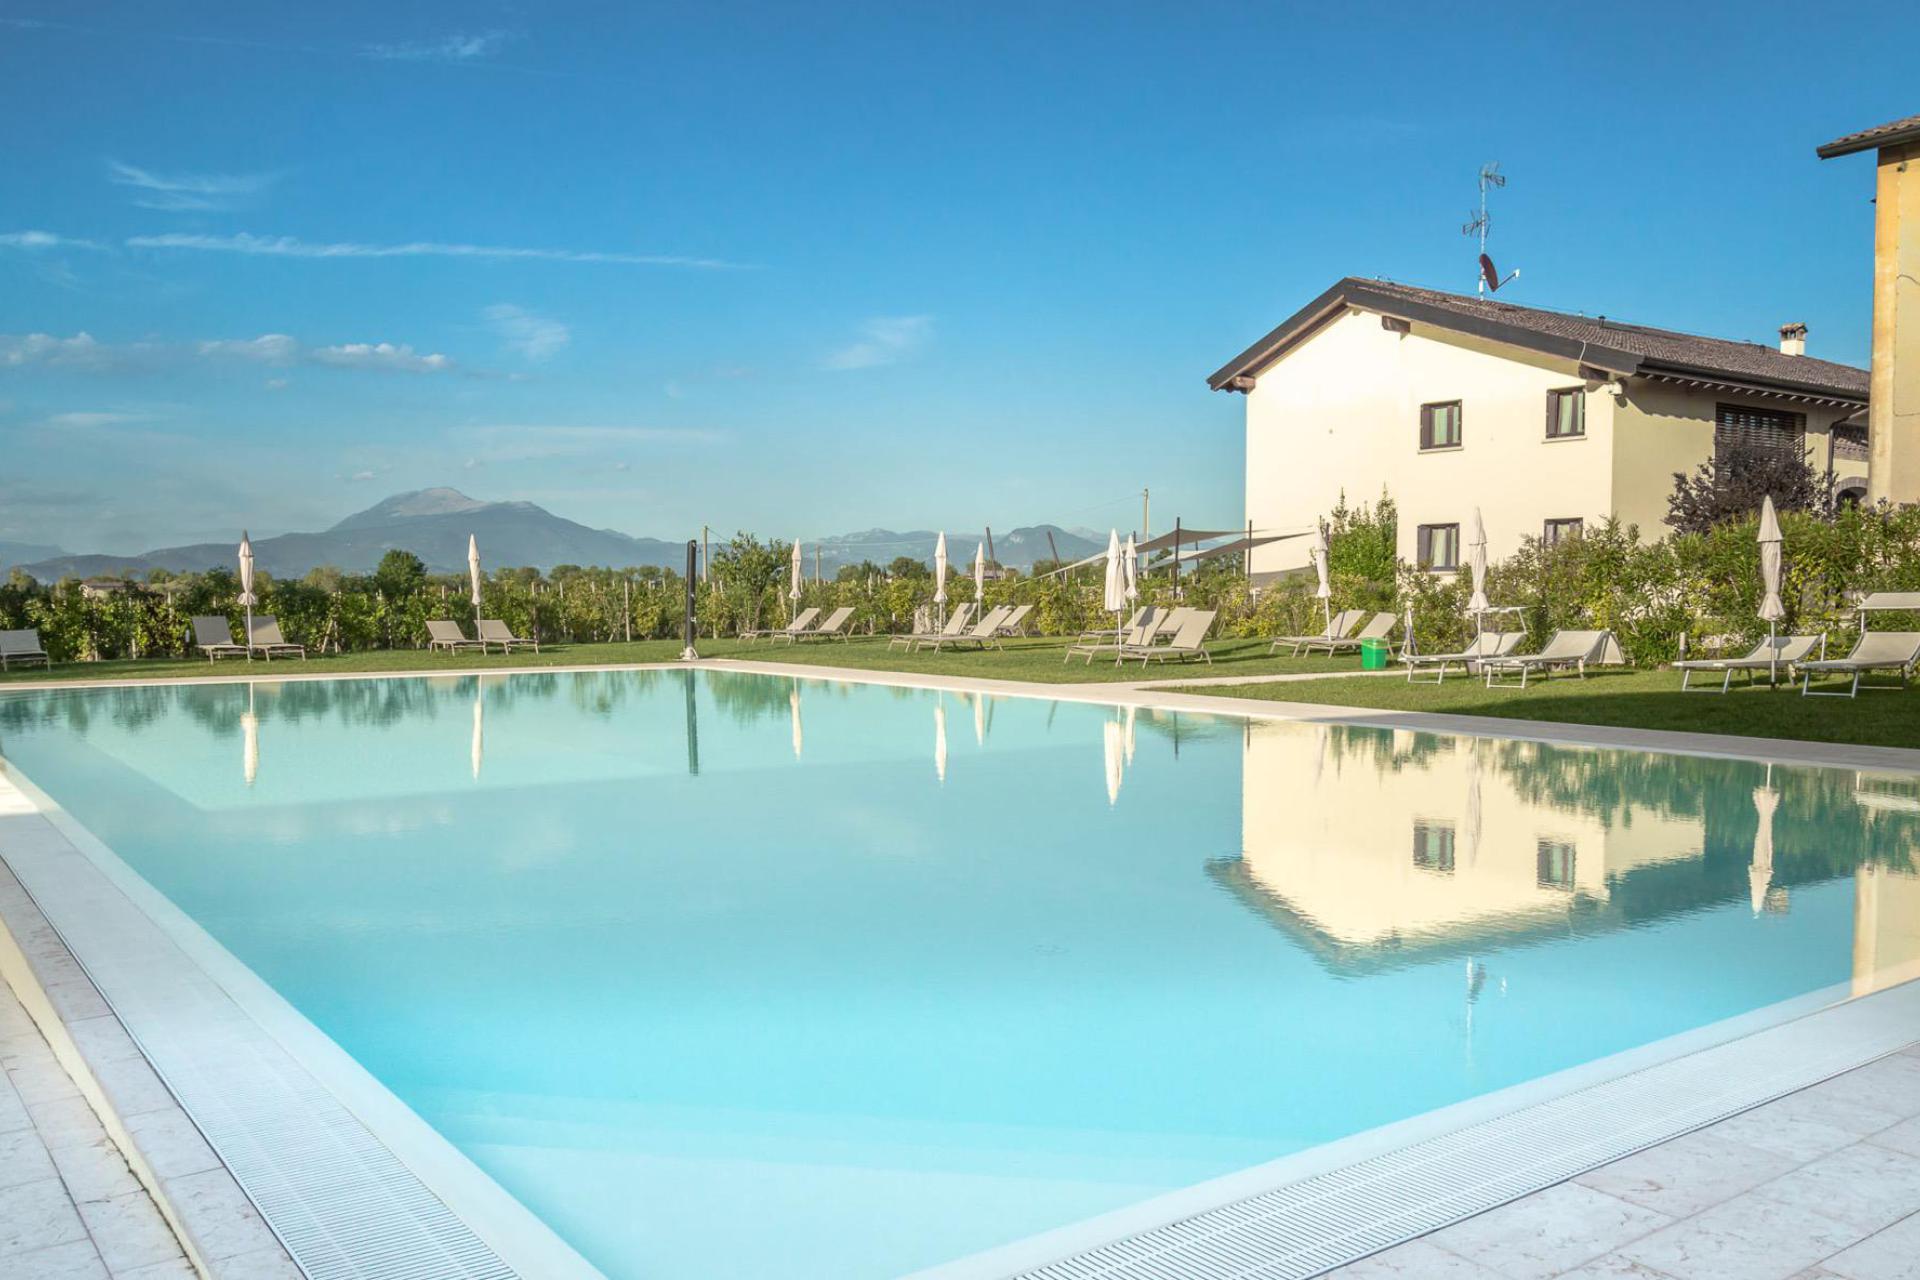 Agriturismo Lake Como and Lake Garda Family agriturismo Lake Garda with large pool